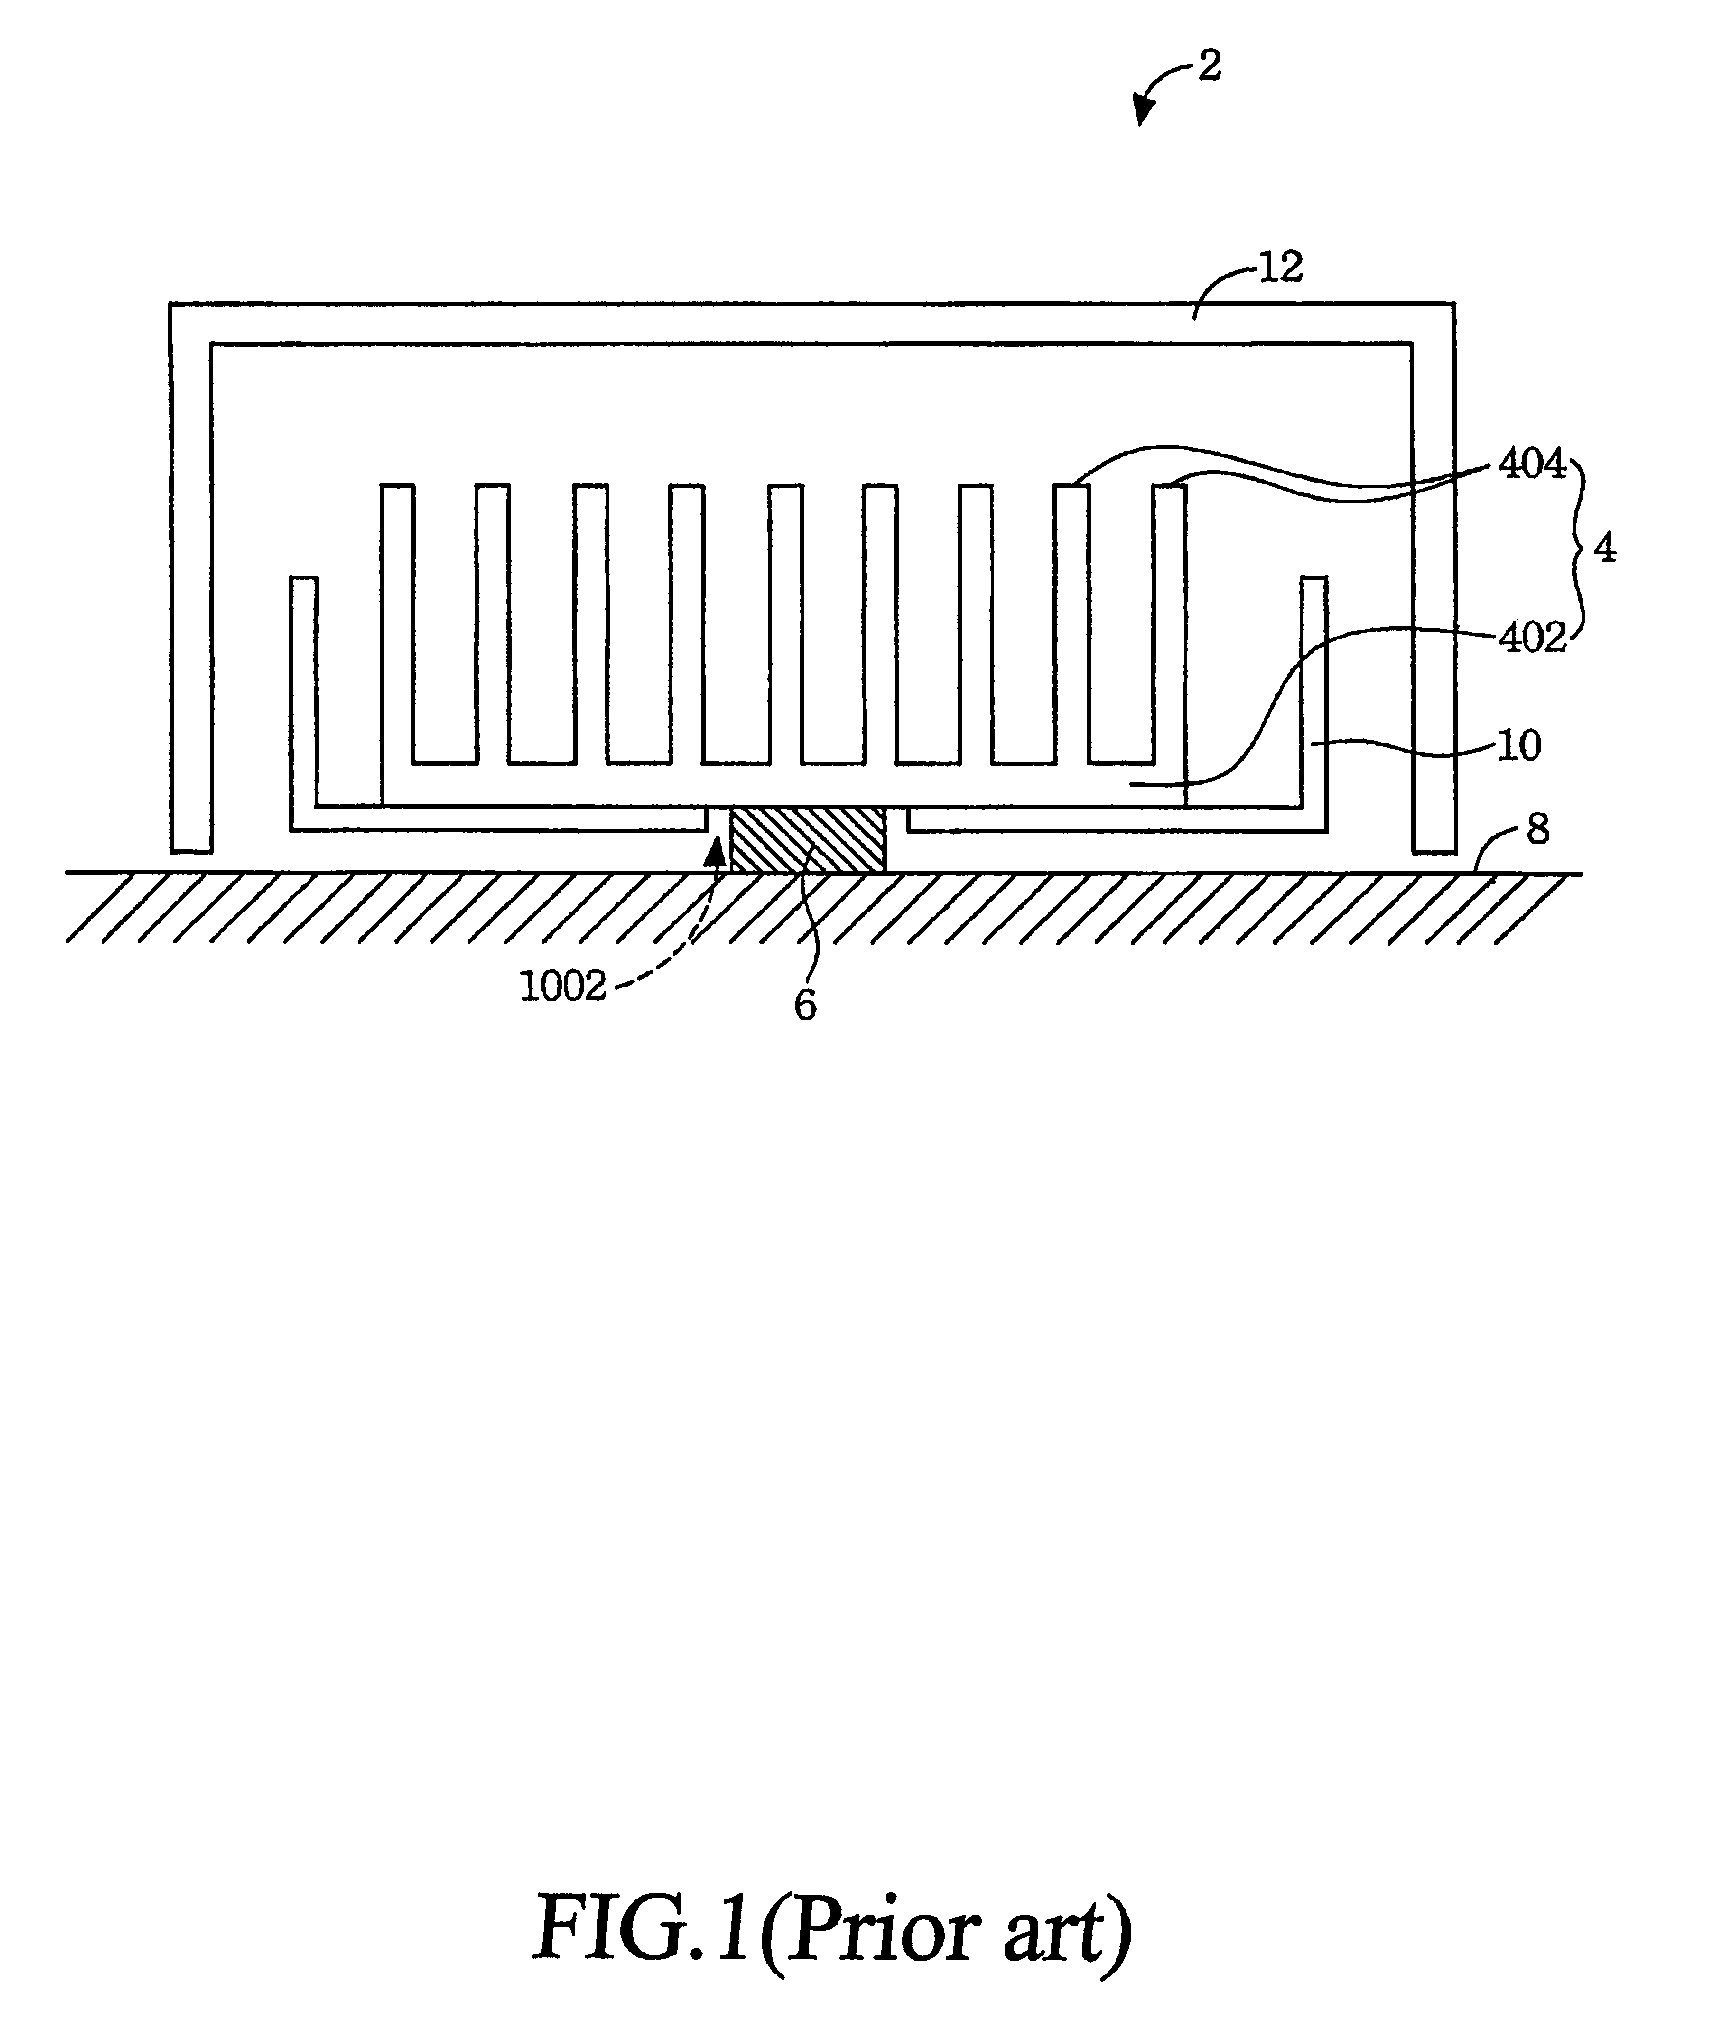 Graphite heat dissipation apparatus and clamping frame for clamping graphite heat dissipation fin module